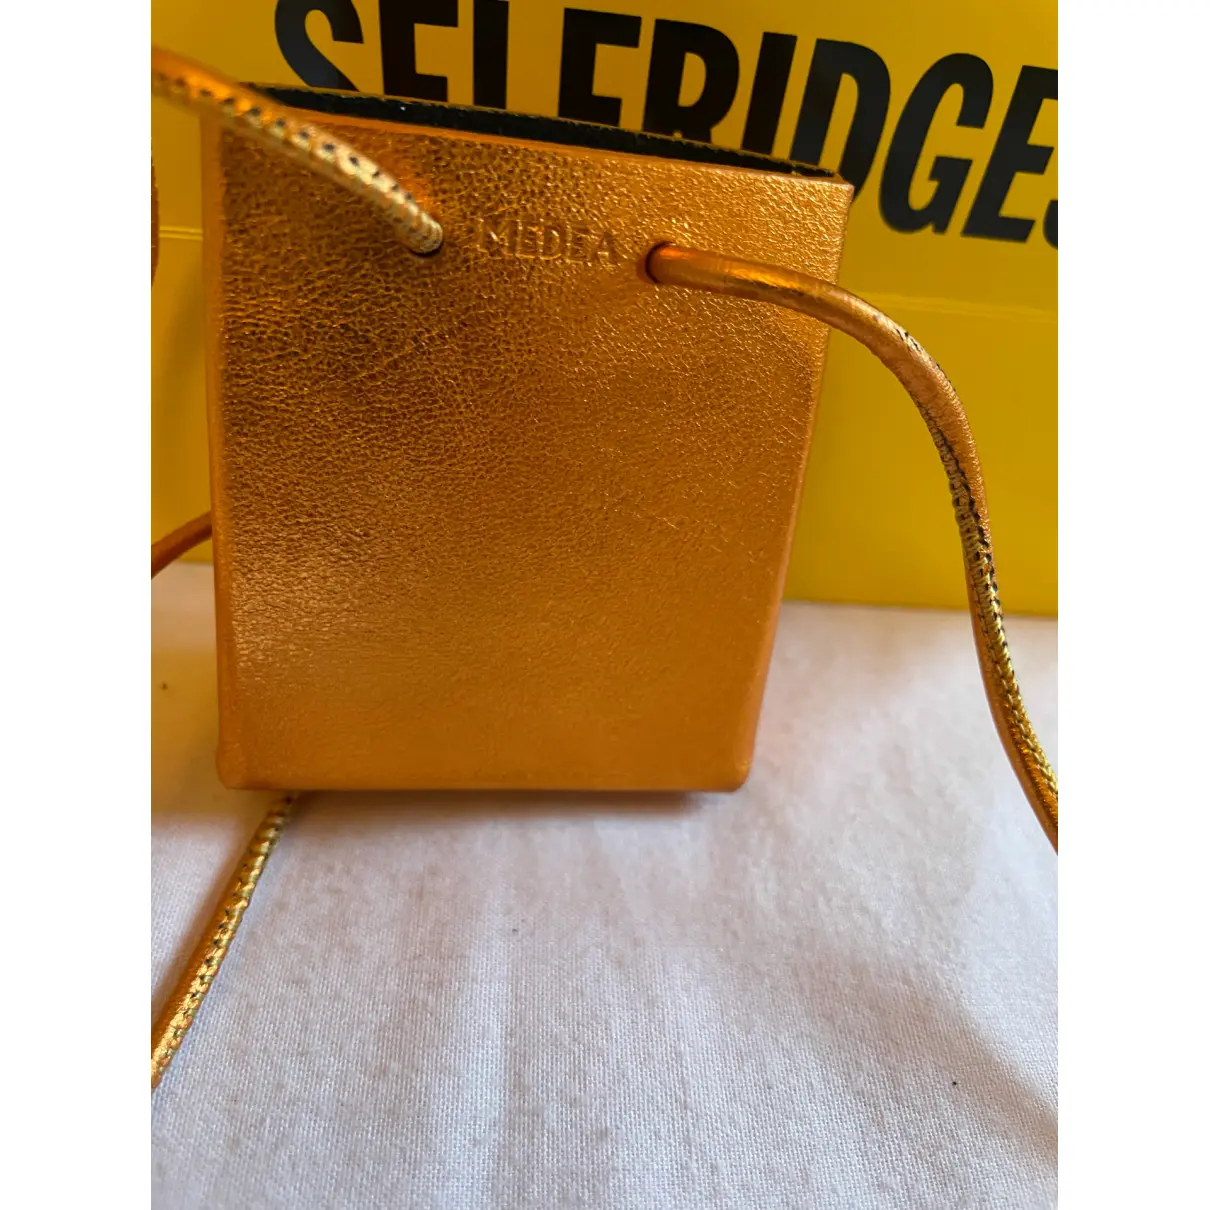 Buy Medea Leather mini bag online